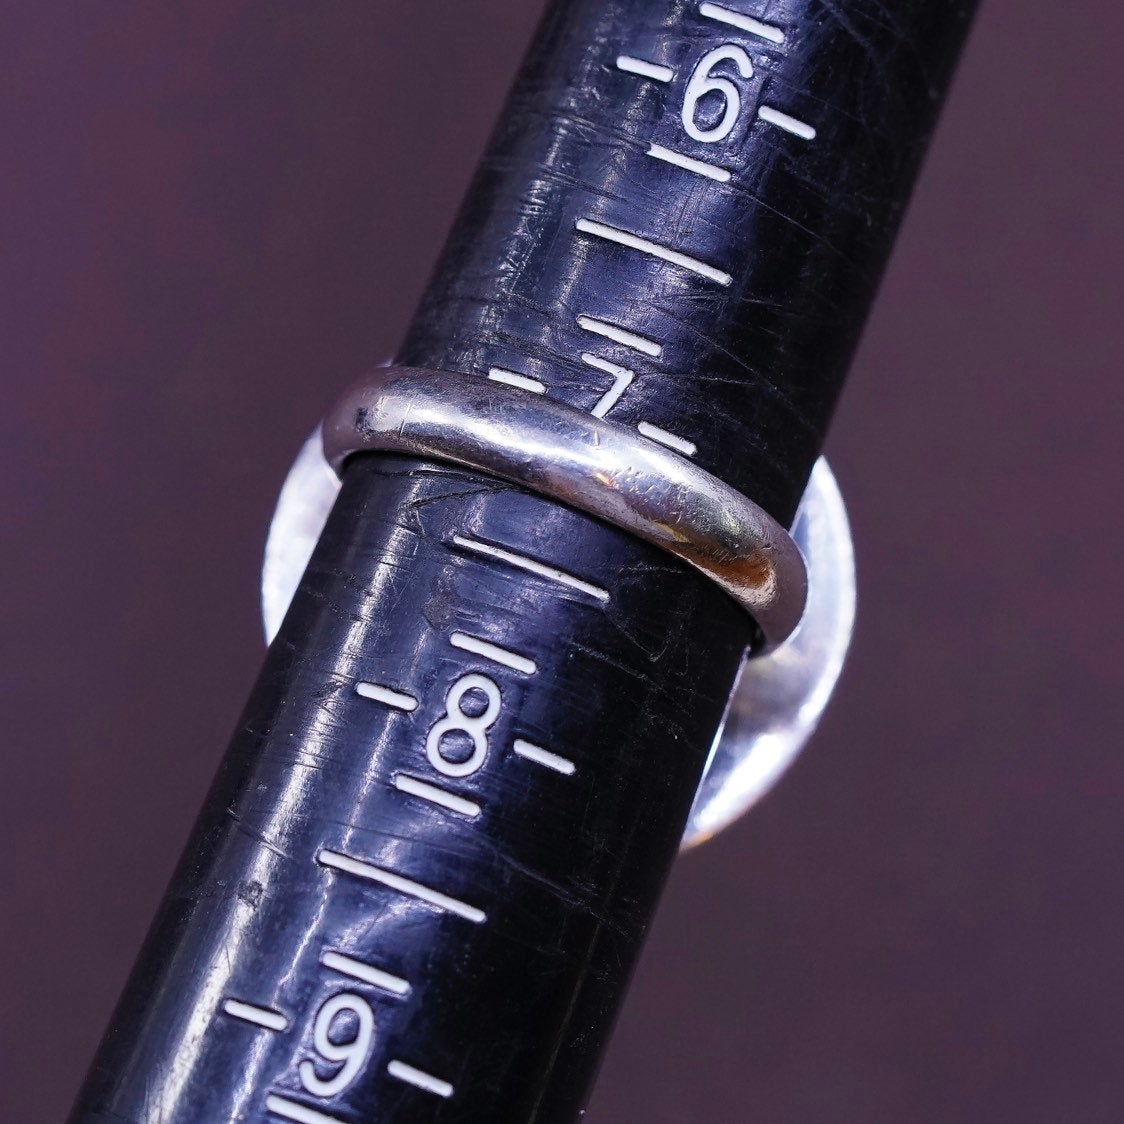 sz 7, vtg Sterling silver handmade ring, 925 diamond textured band